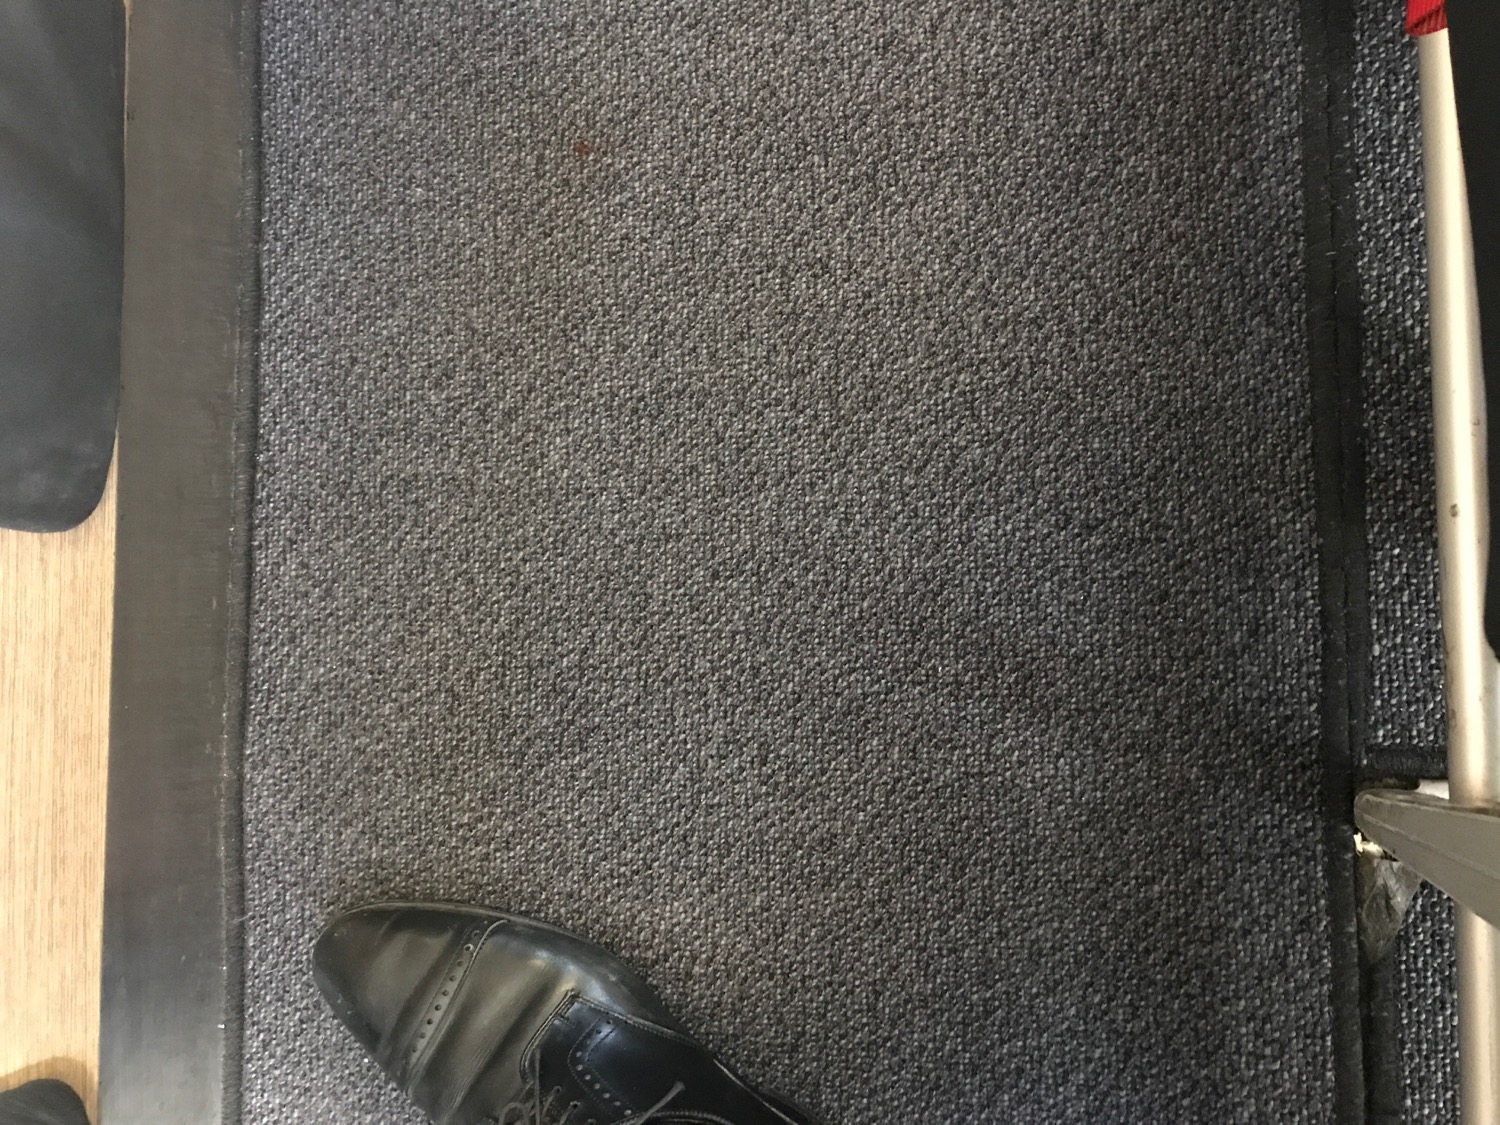 a black shoe on a carpet